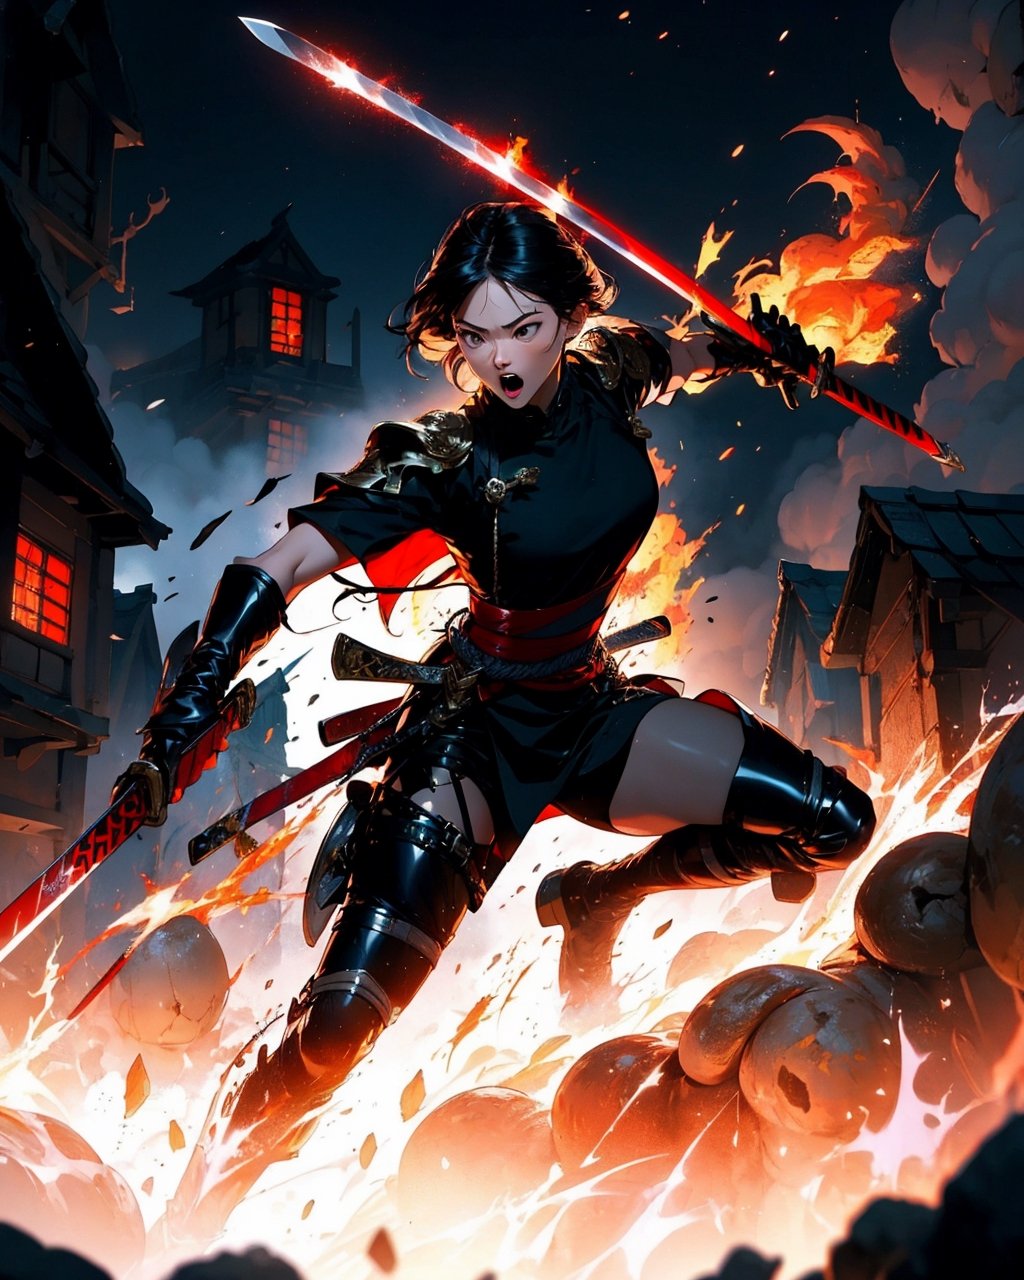 epic scene, samourai, long sword:shiny/vibrant/red ,Holdingsword, scream, action position, dynamic position, houses in fire